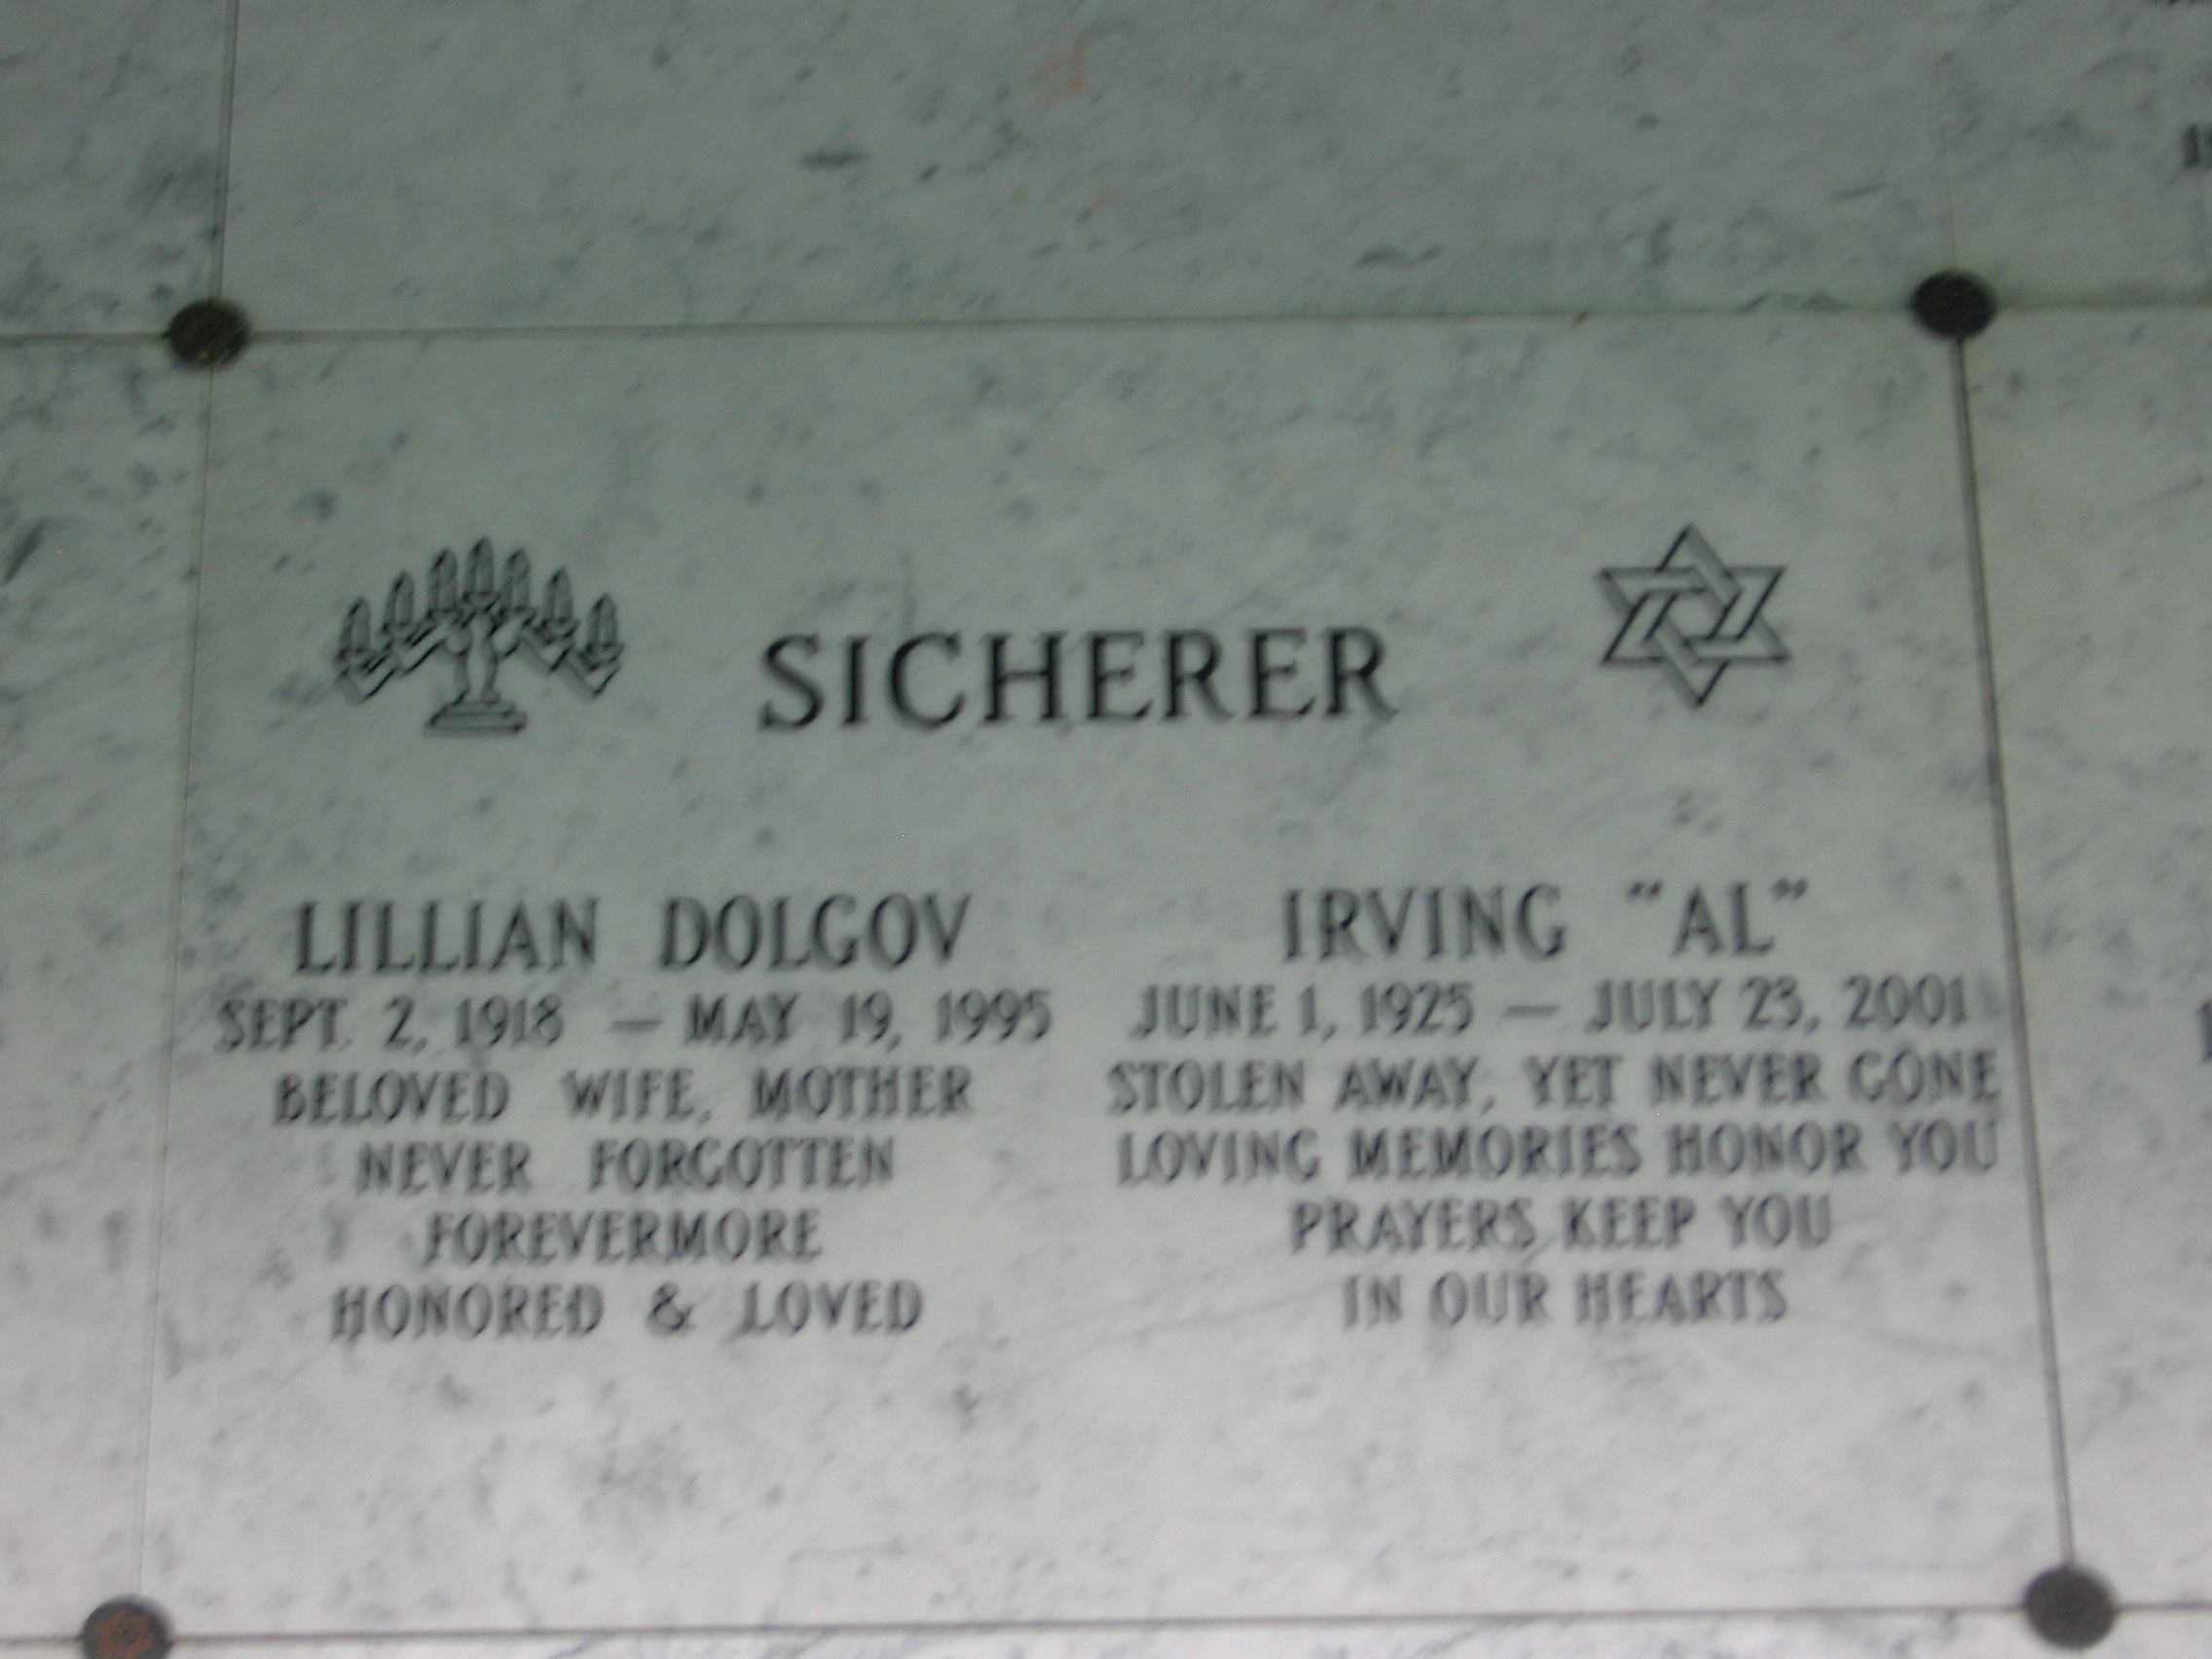 Irving "Al" Sicherer